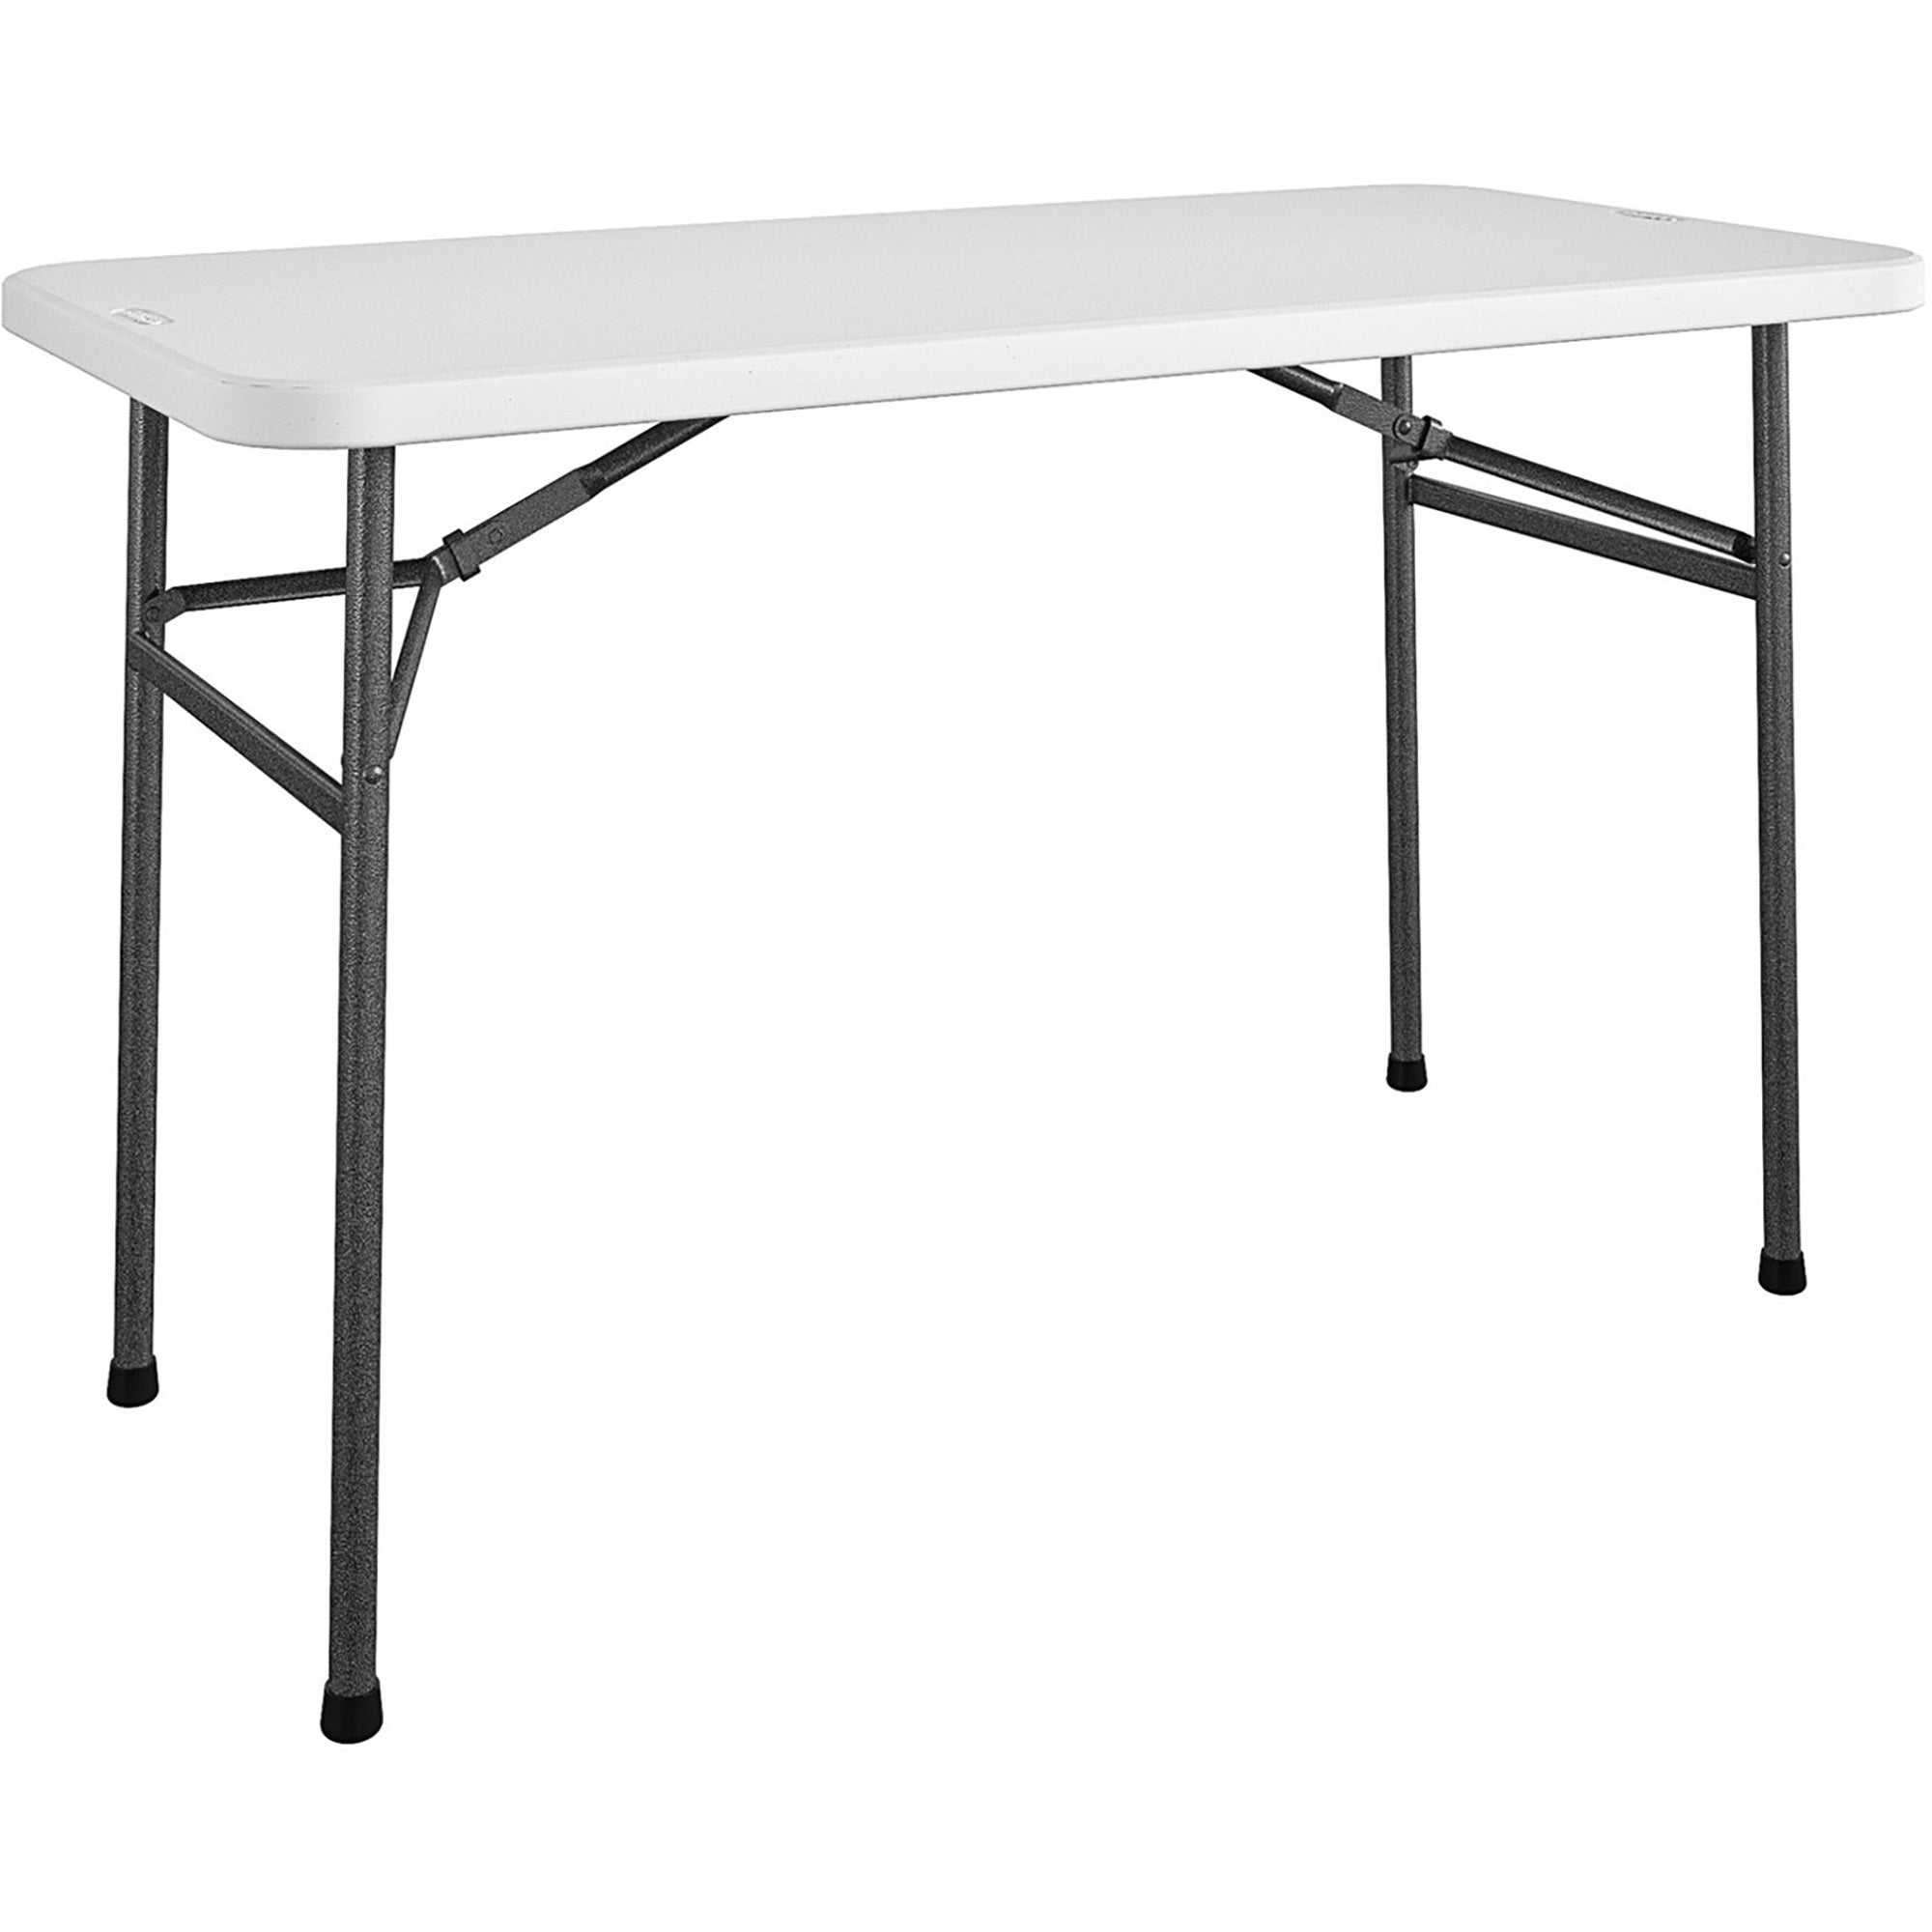 Cosco Straight Folding Utility Table - For - Table TopRectangle Top - Four Leg Base - 4 Legs - 200 lb Capacity x 48" Table Top Width x 24" Table Top Depth - 29.25" Height - White - 1 Each - 1